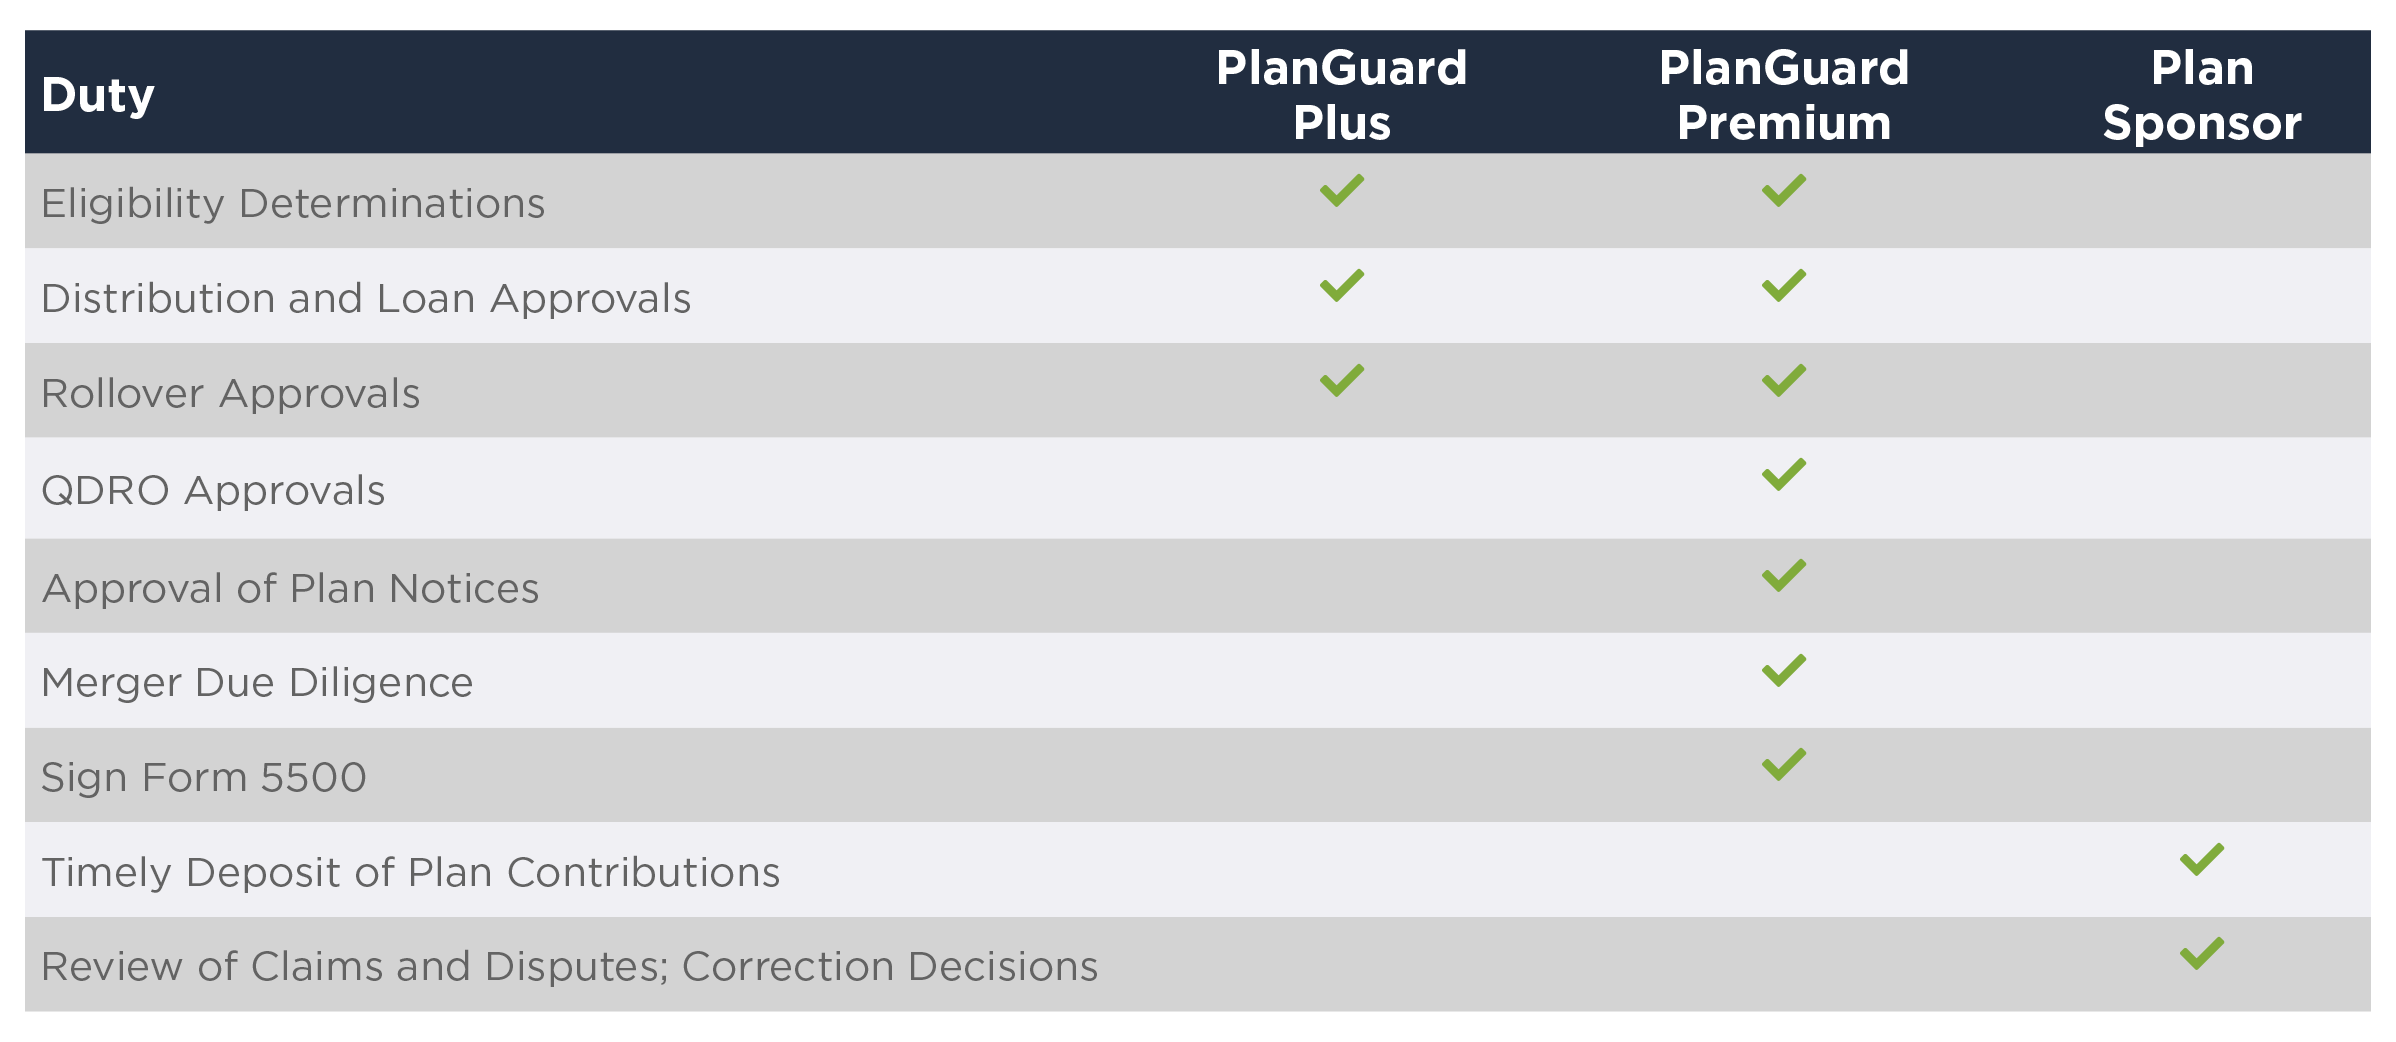 BlueStar PlanGuard fiduciary services chart breakdown